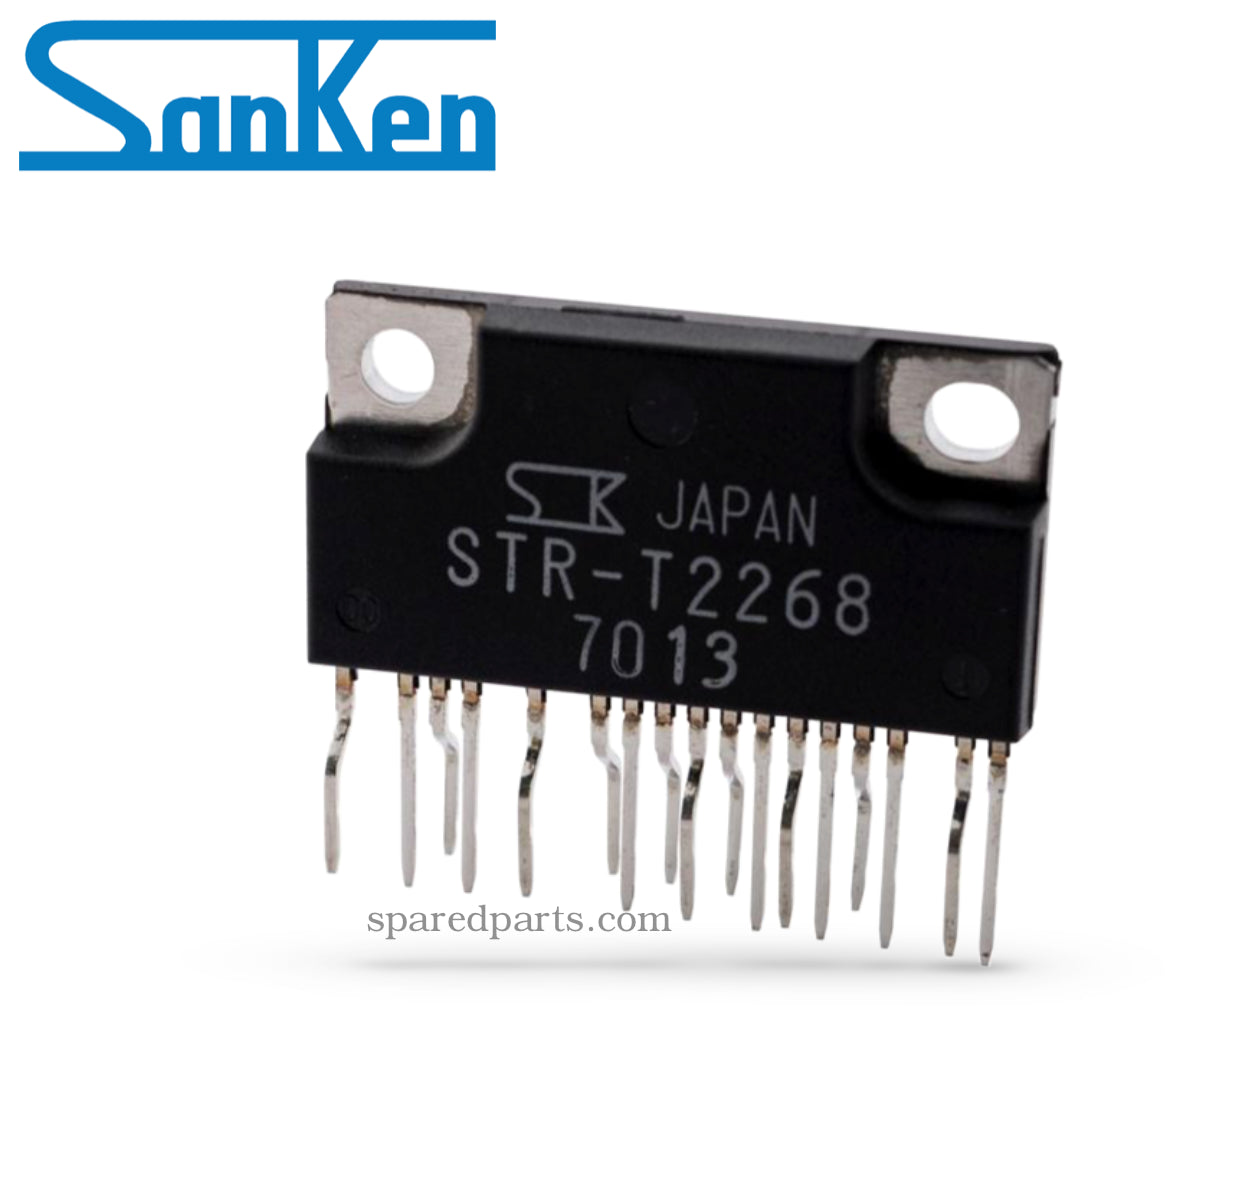 Sanken STR-T2268 Integrated Circuit STRT2268